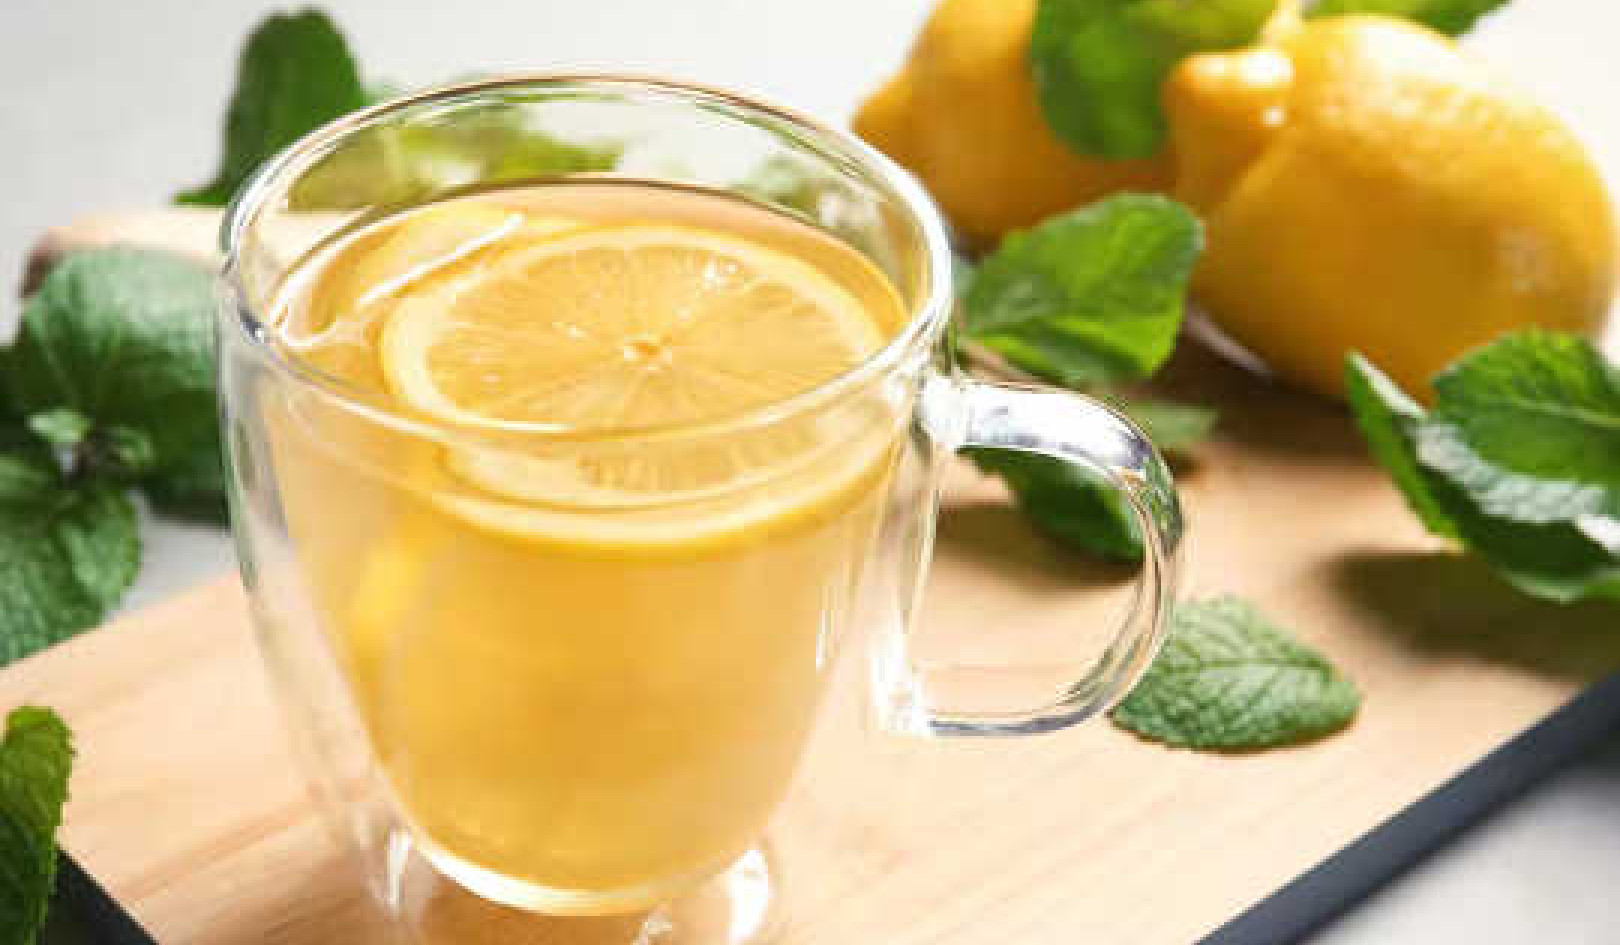 Will Lemon Water Detox Or Energize You?